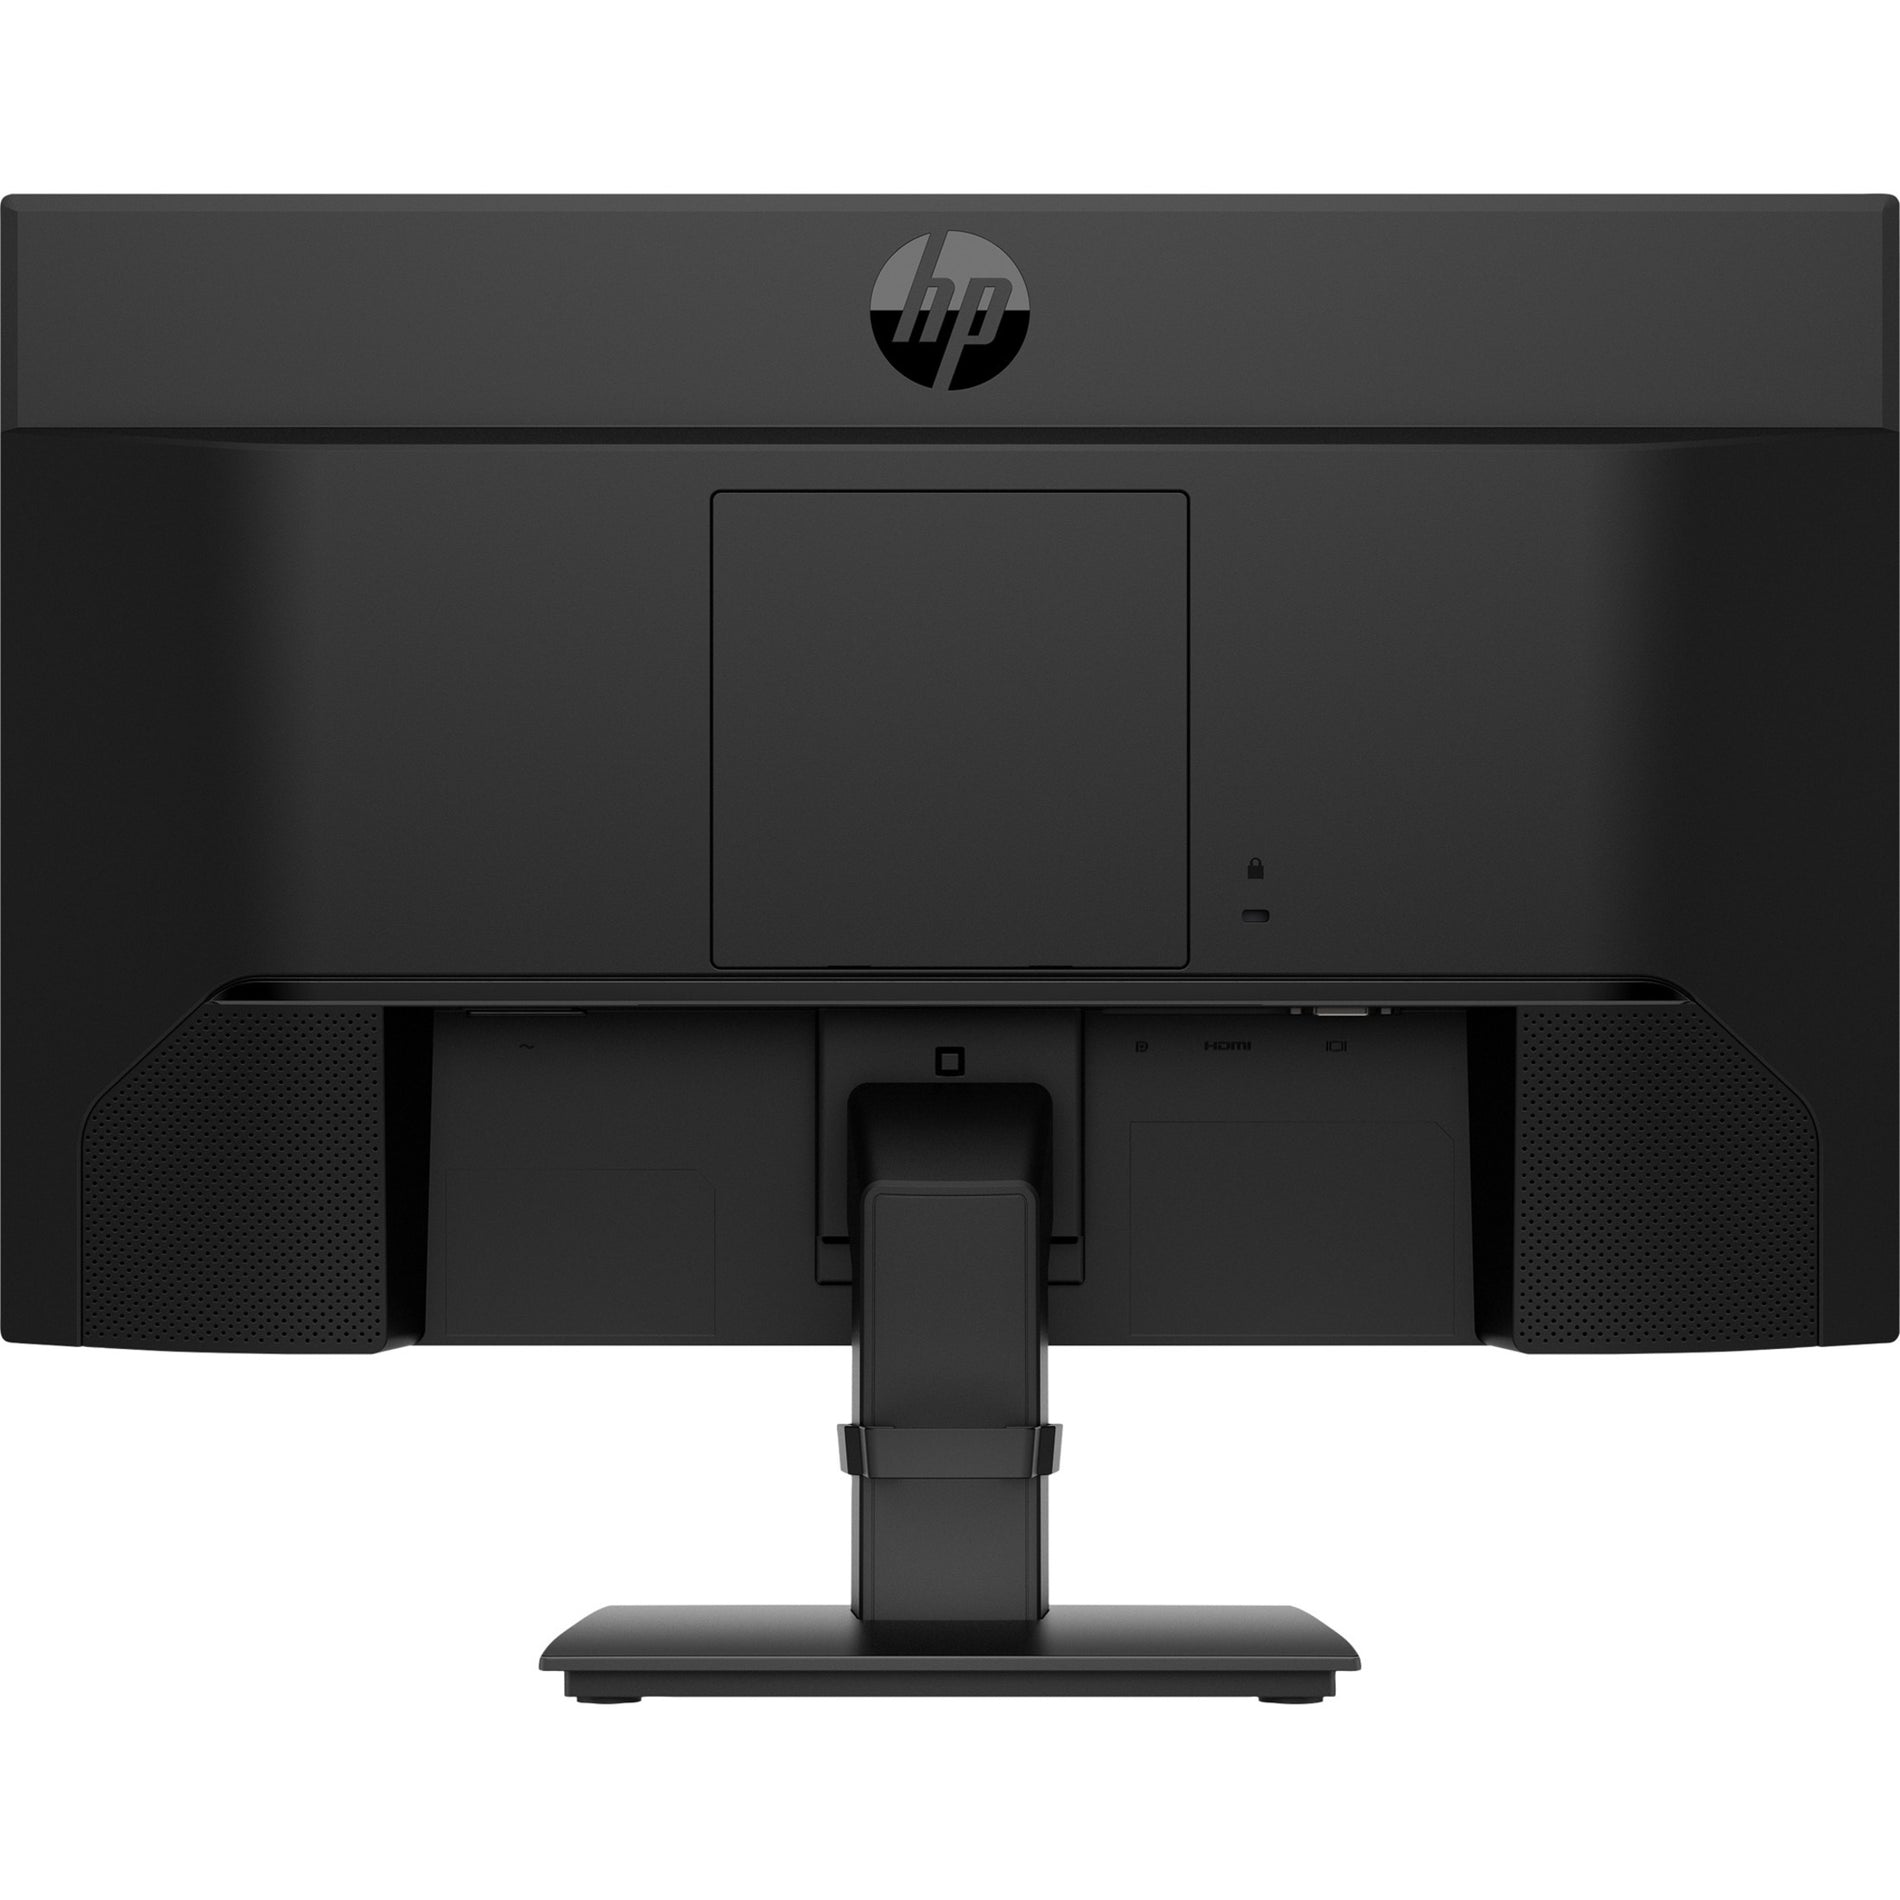 HP P24 G4 23.8" Full HD LCD Monitor, 250 Nit Brightness, 1920 x 1080 Resolution, 16:9 Aspect Ratio